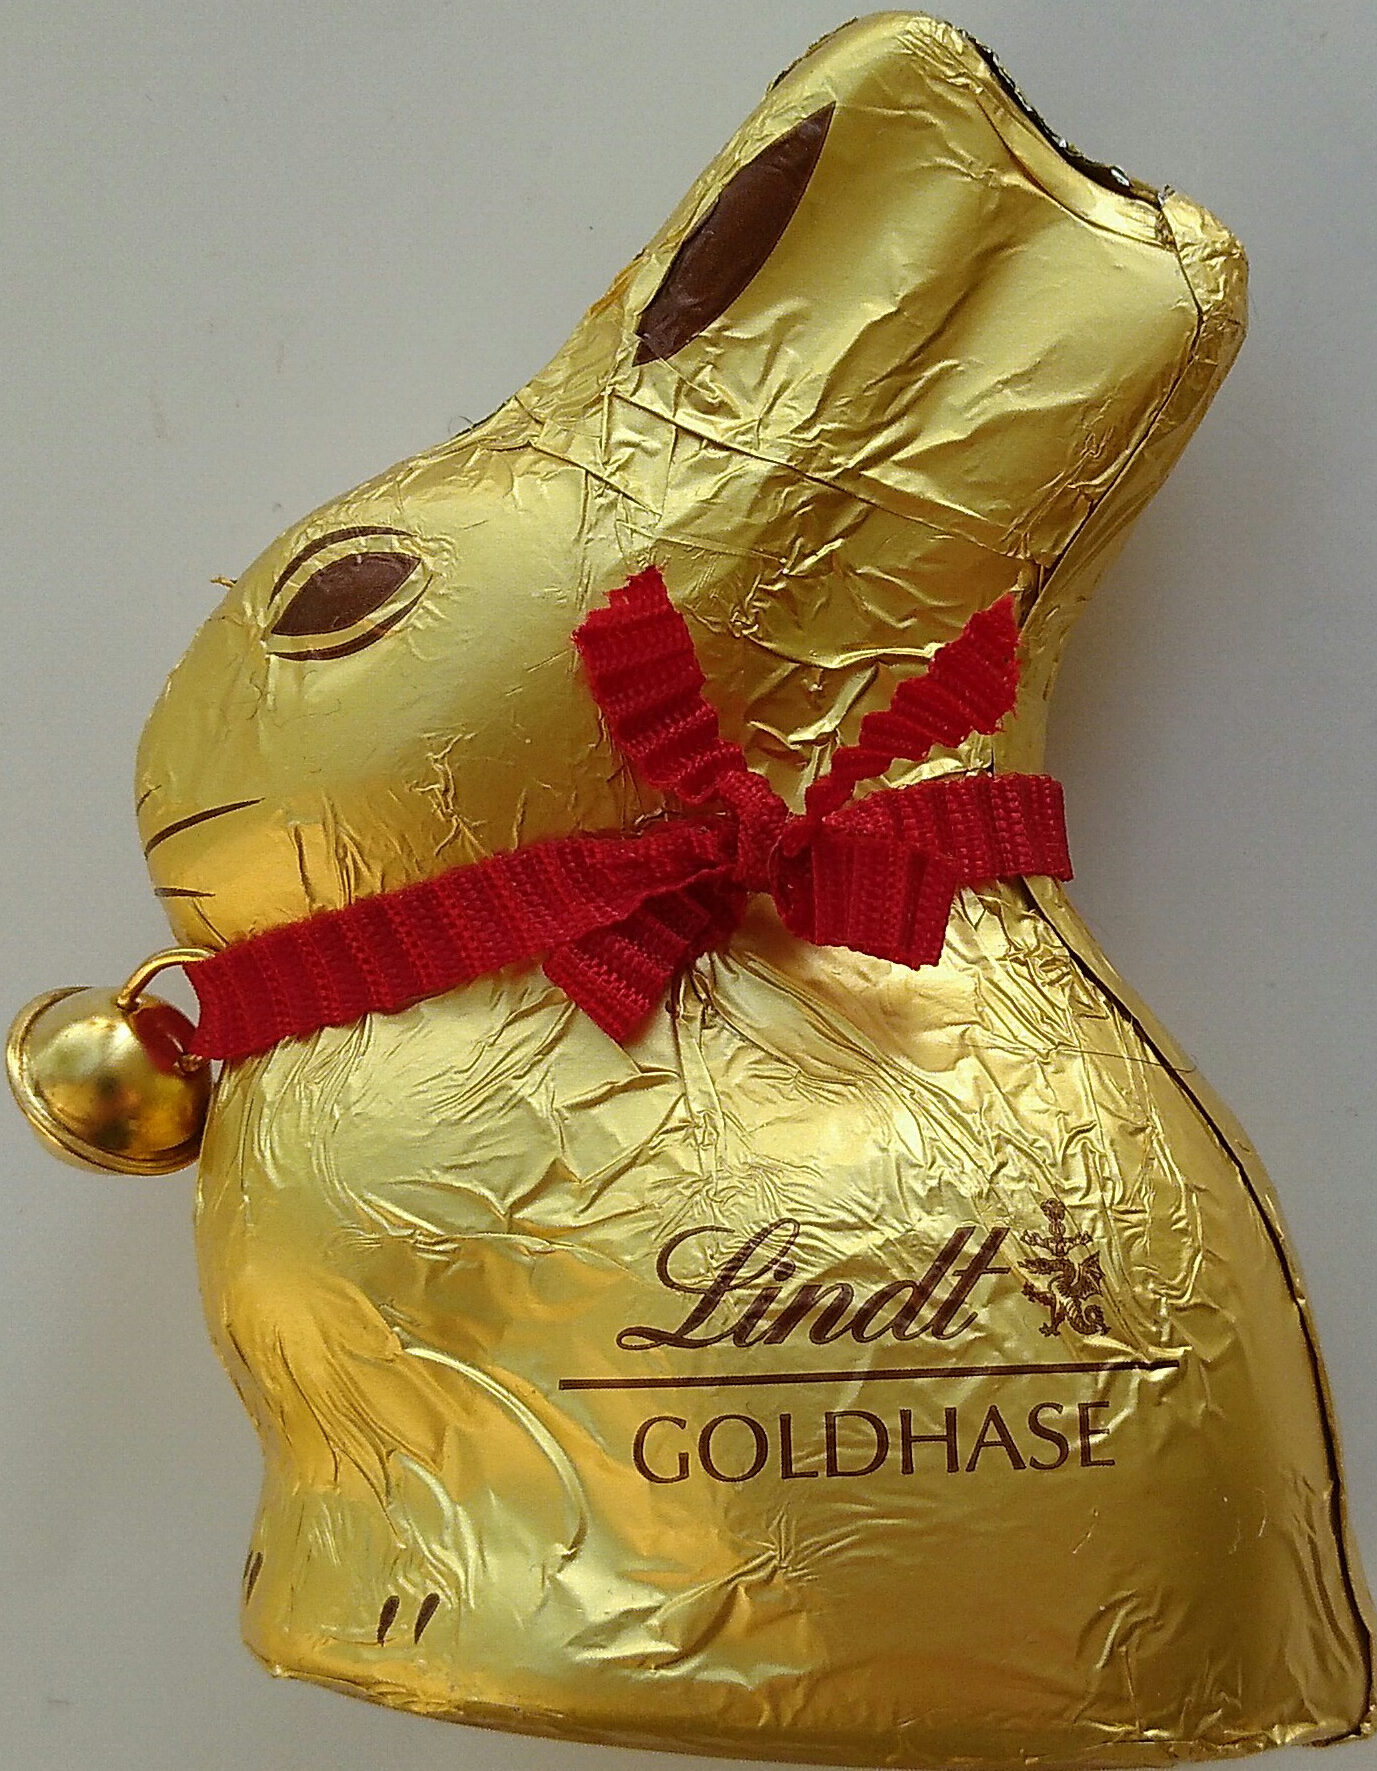 Gold Bunny - Produkt